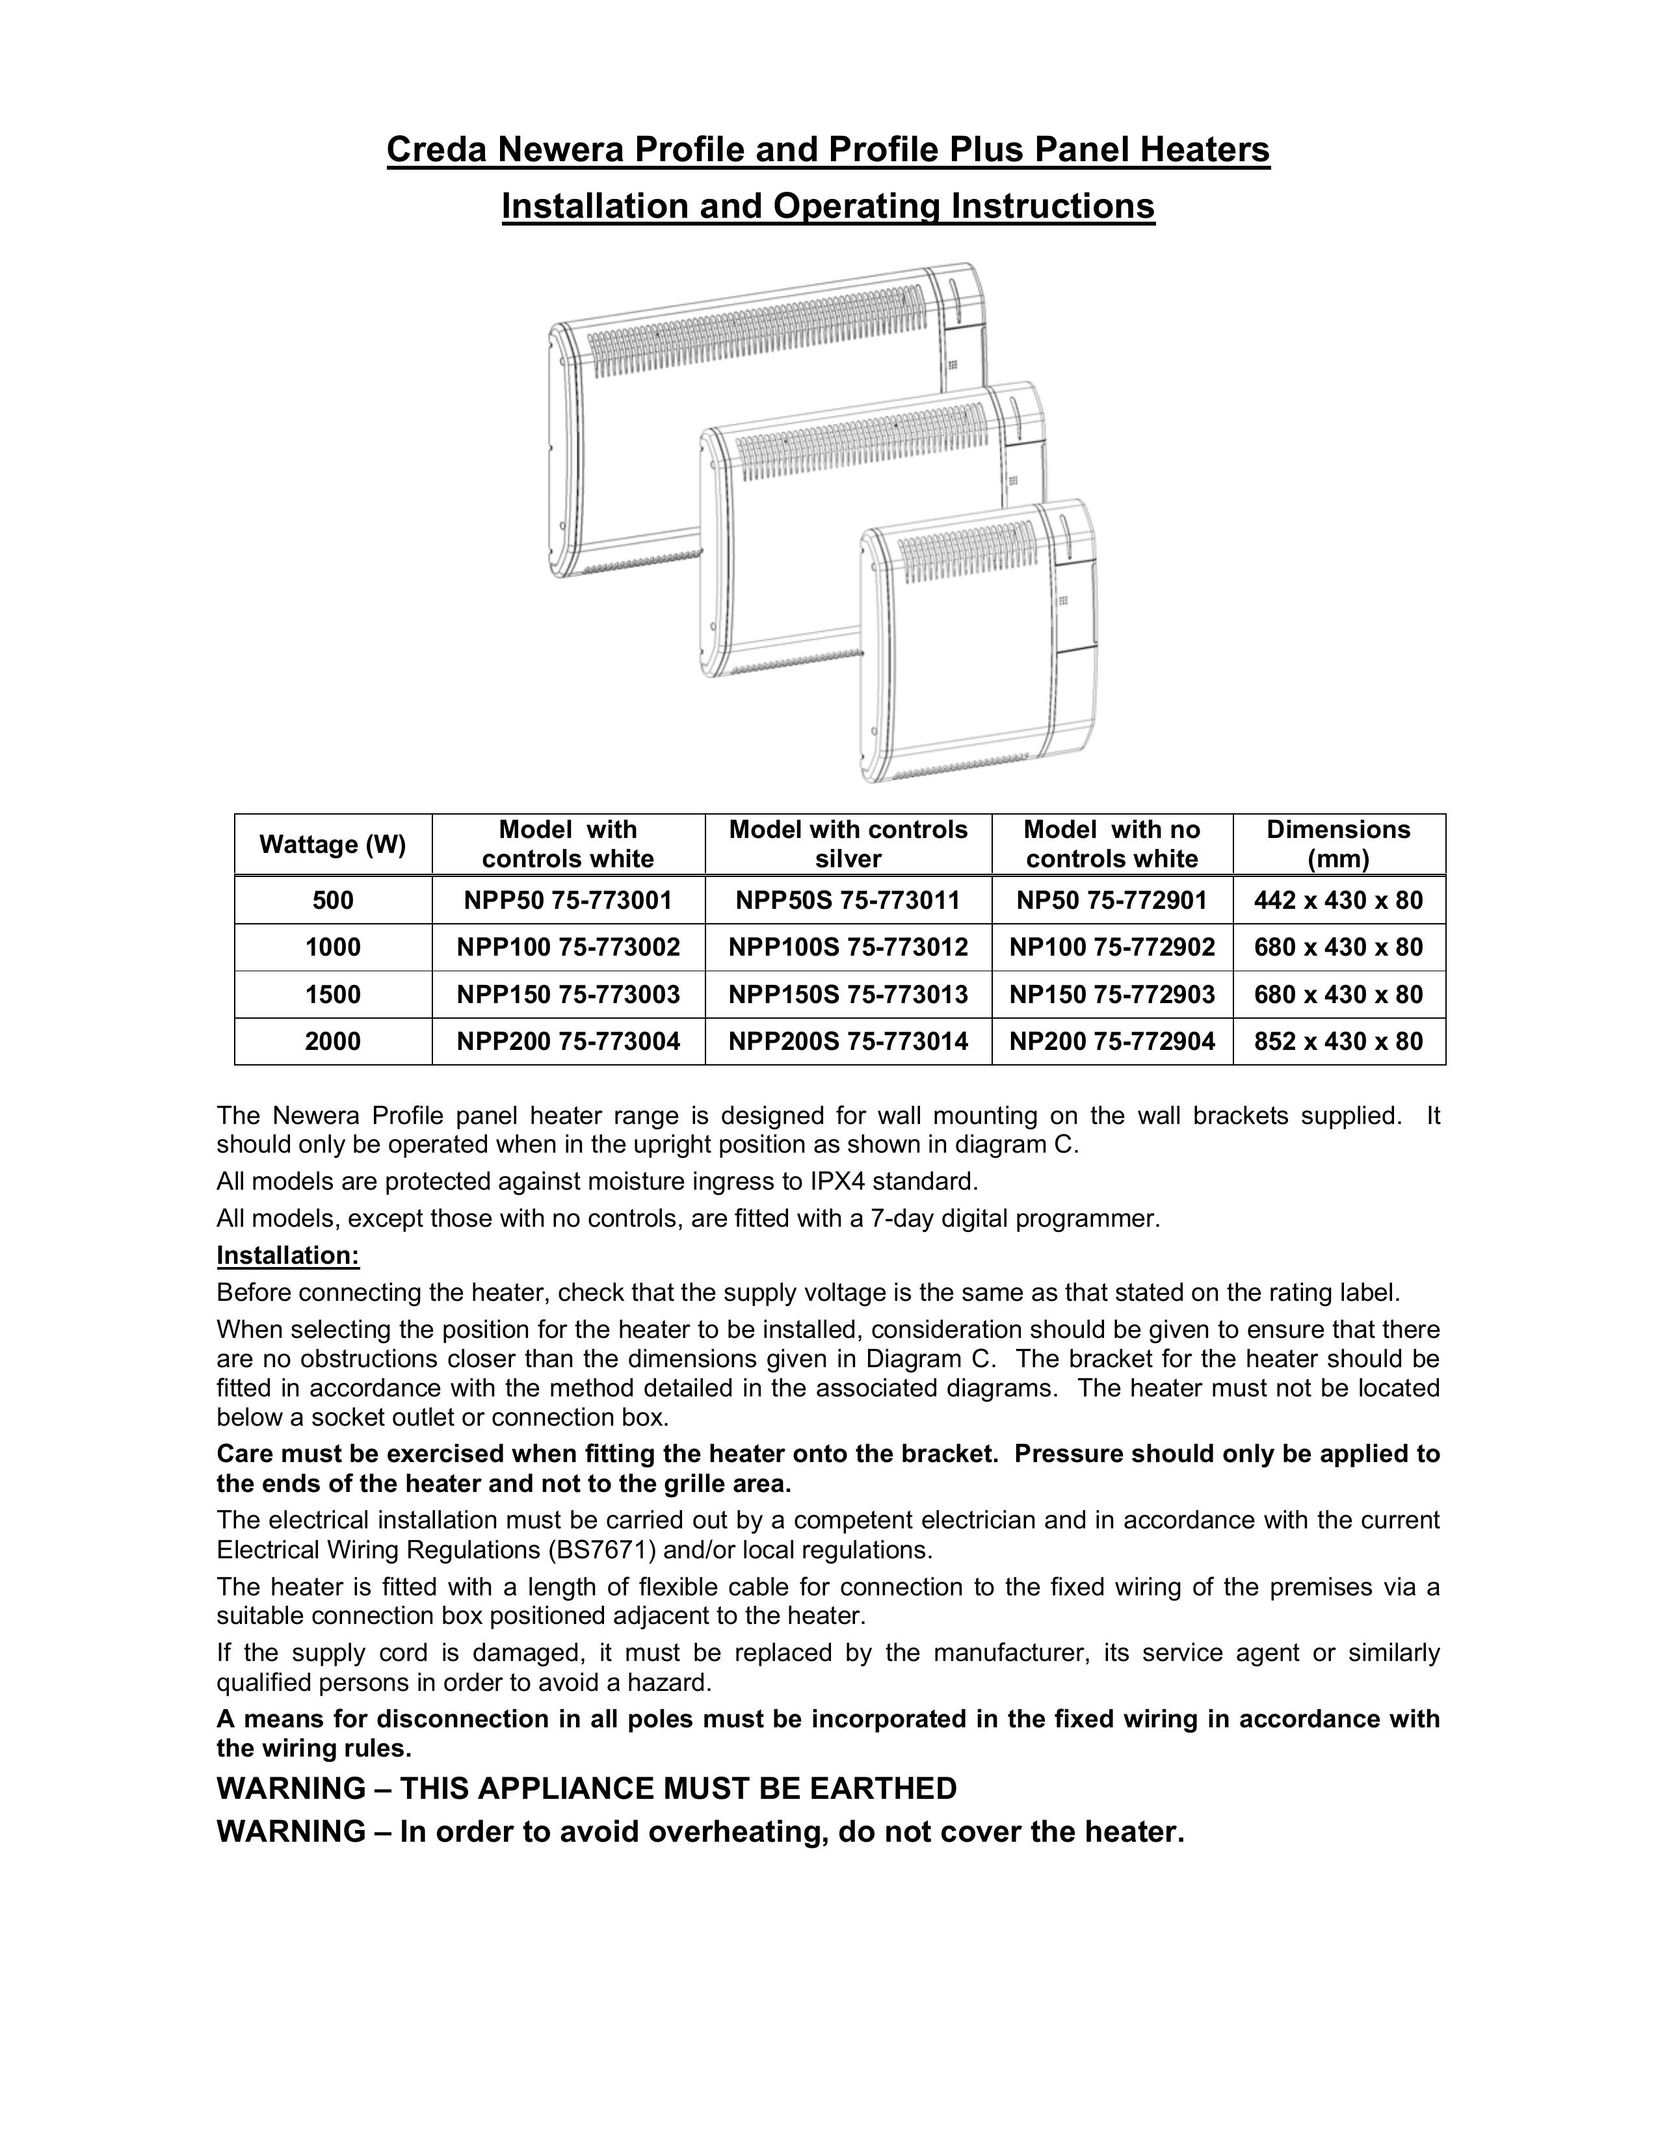 Creda NP50 75-772901 Air Conditioner User Manual